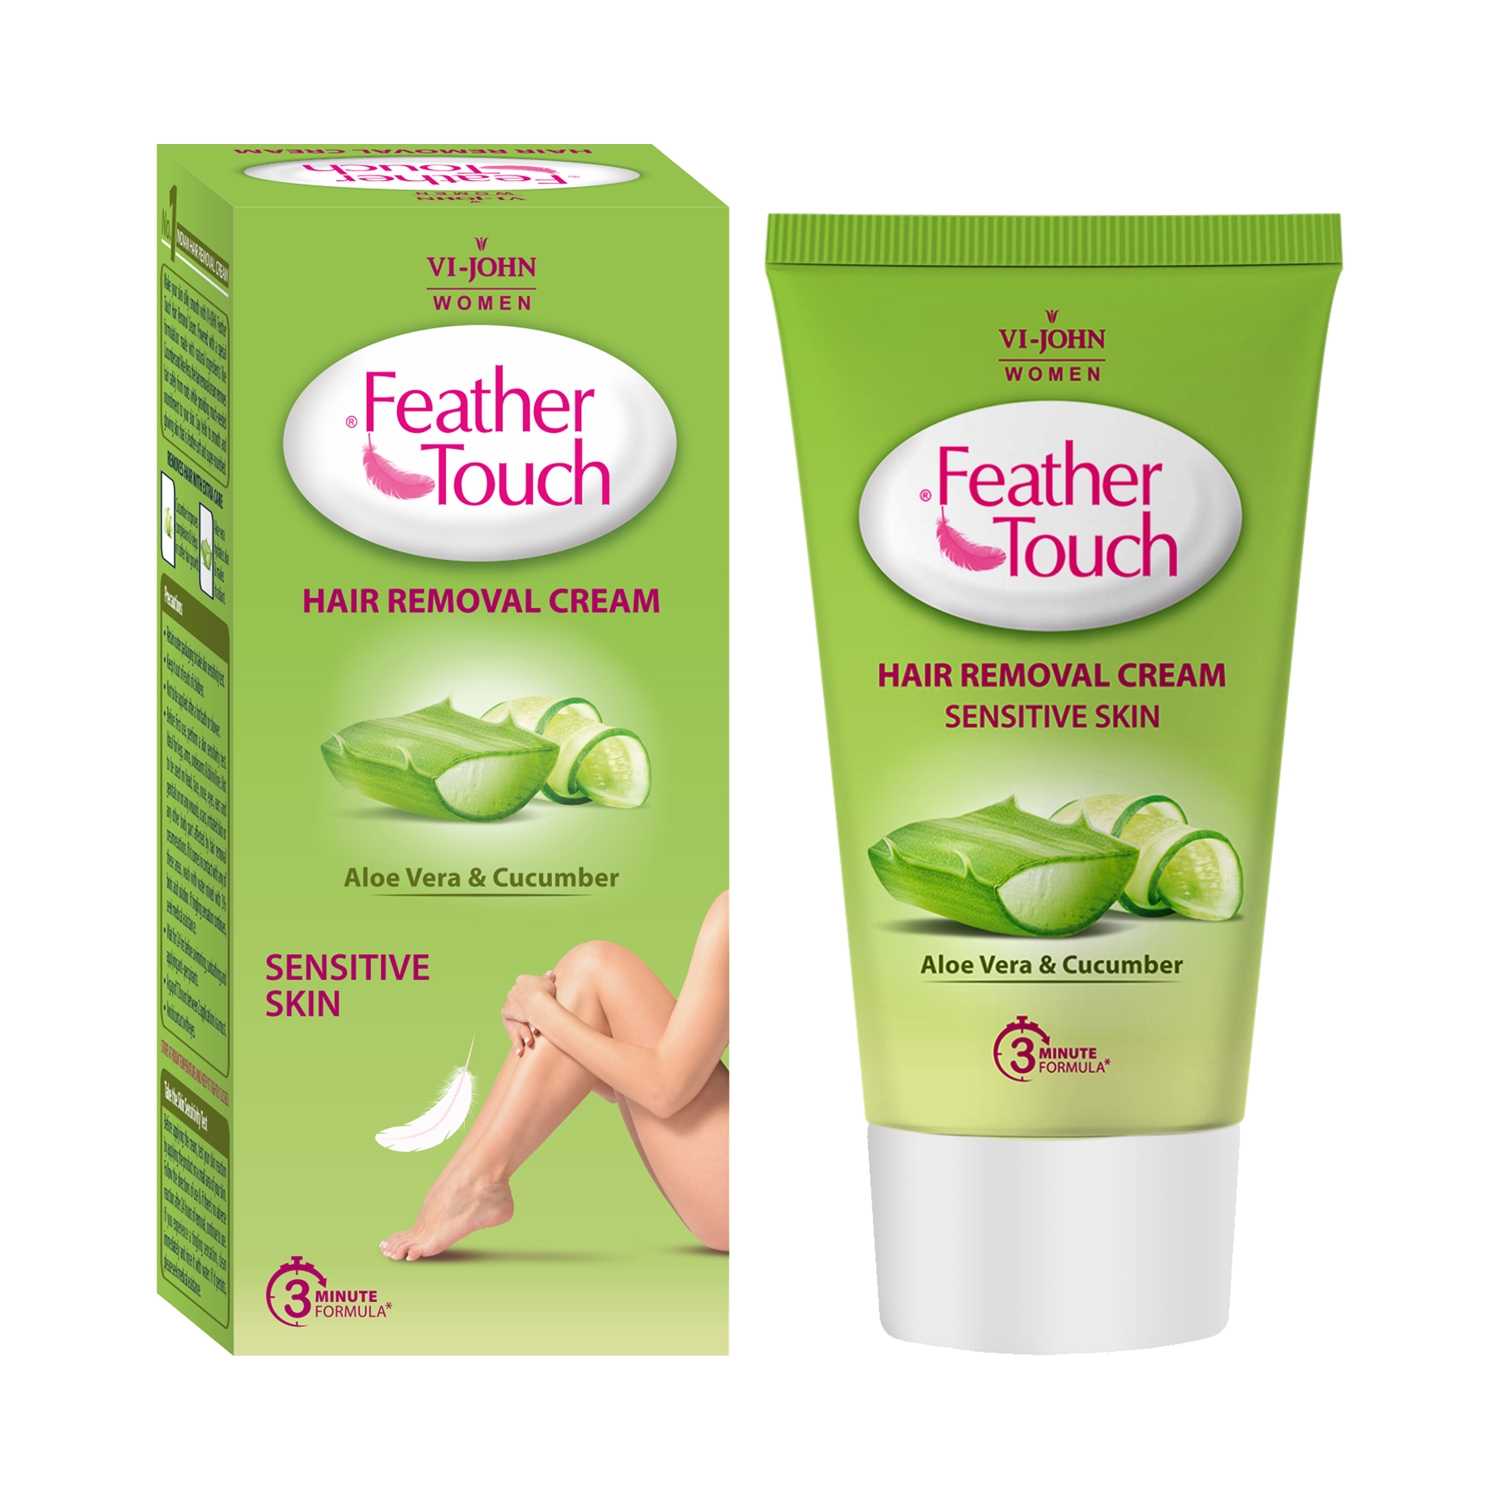 VI-JOHN | VI-JOHN Feather Touch Hair Removal Cream With Cucumber & Aloe Vera Tube For Sensitive Skin (40g)